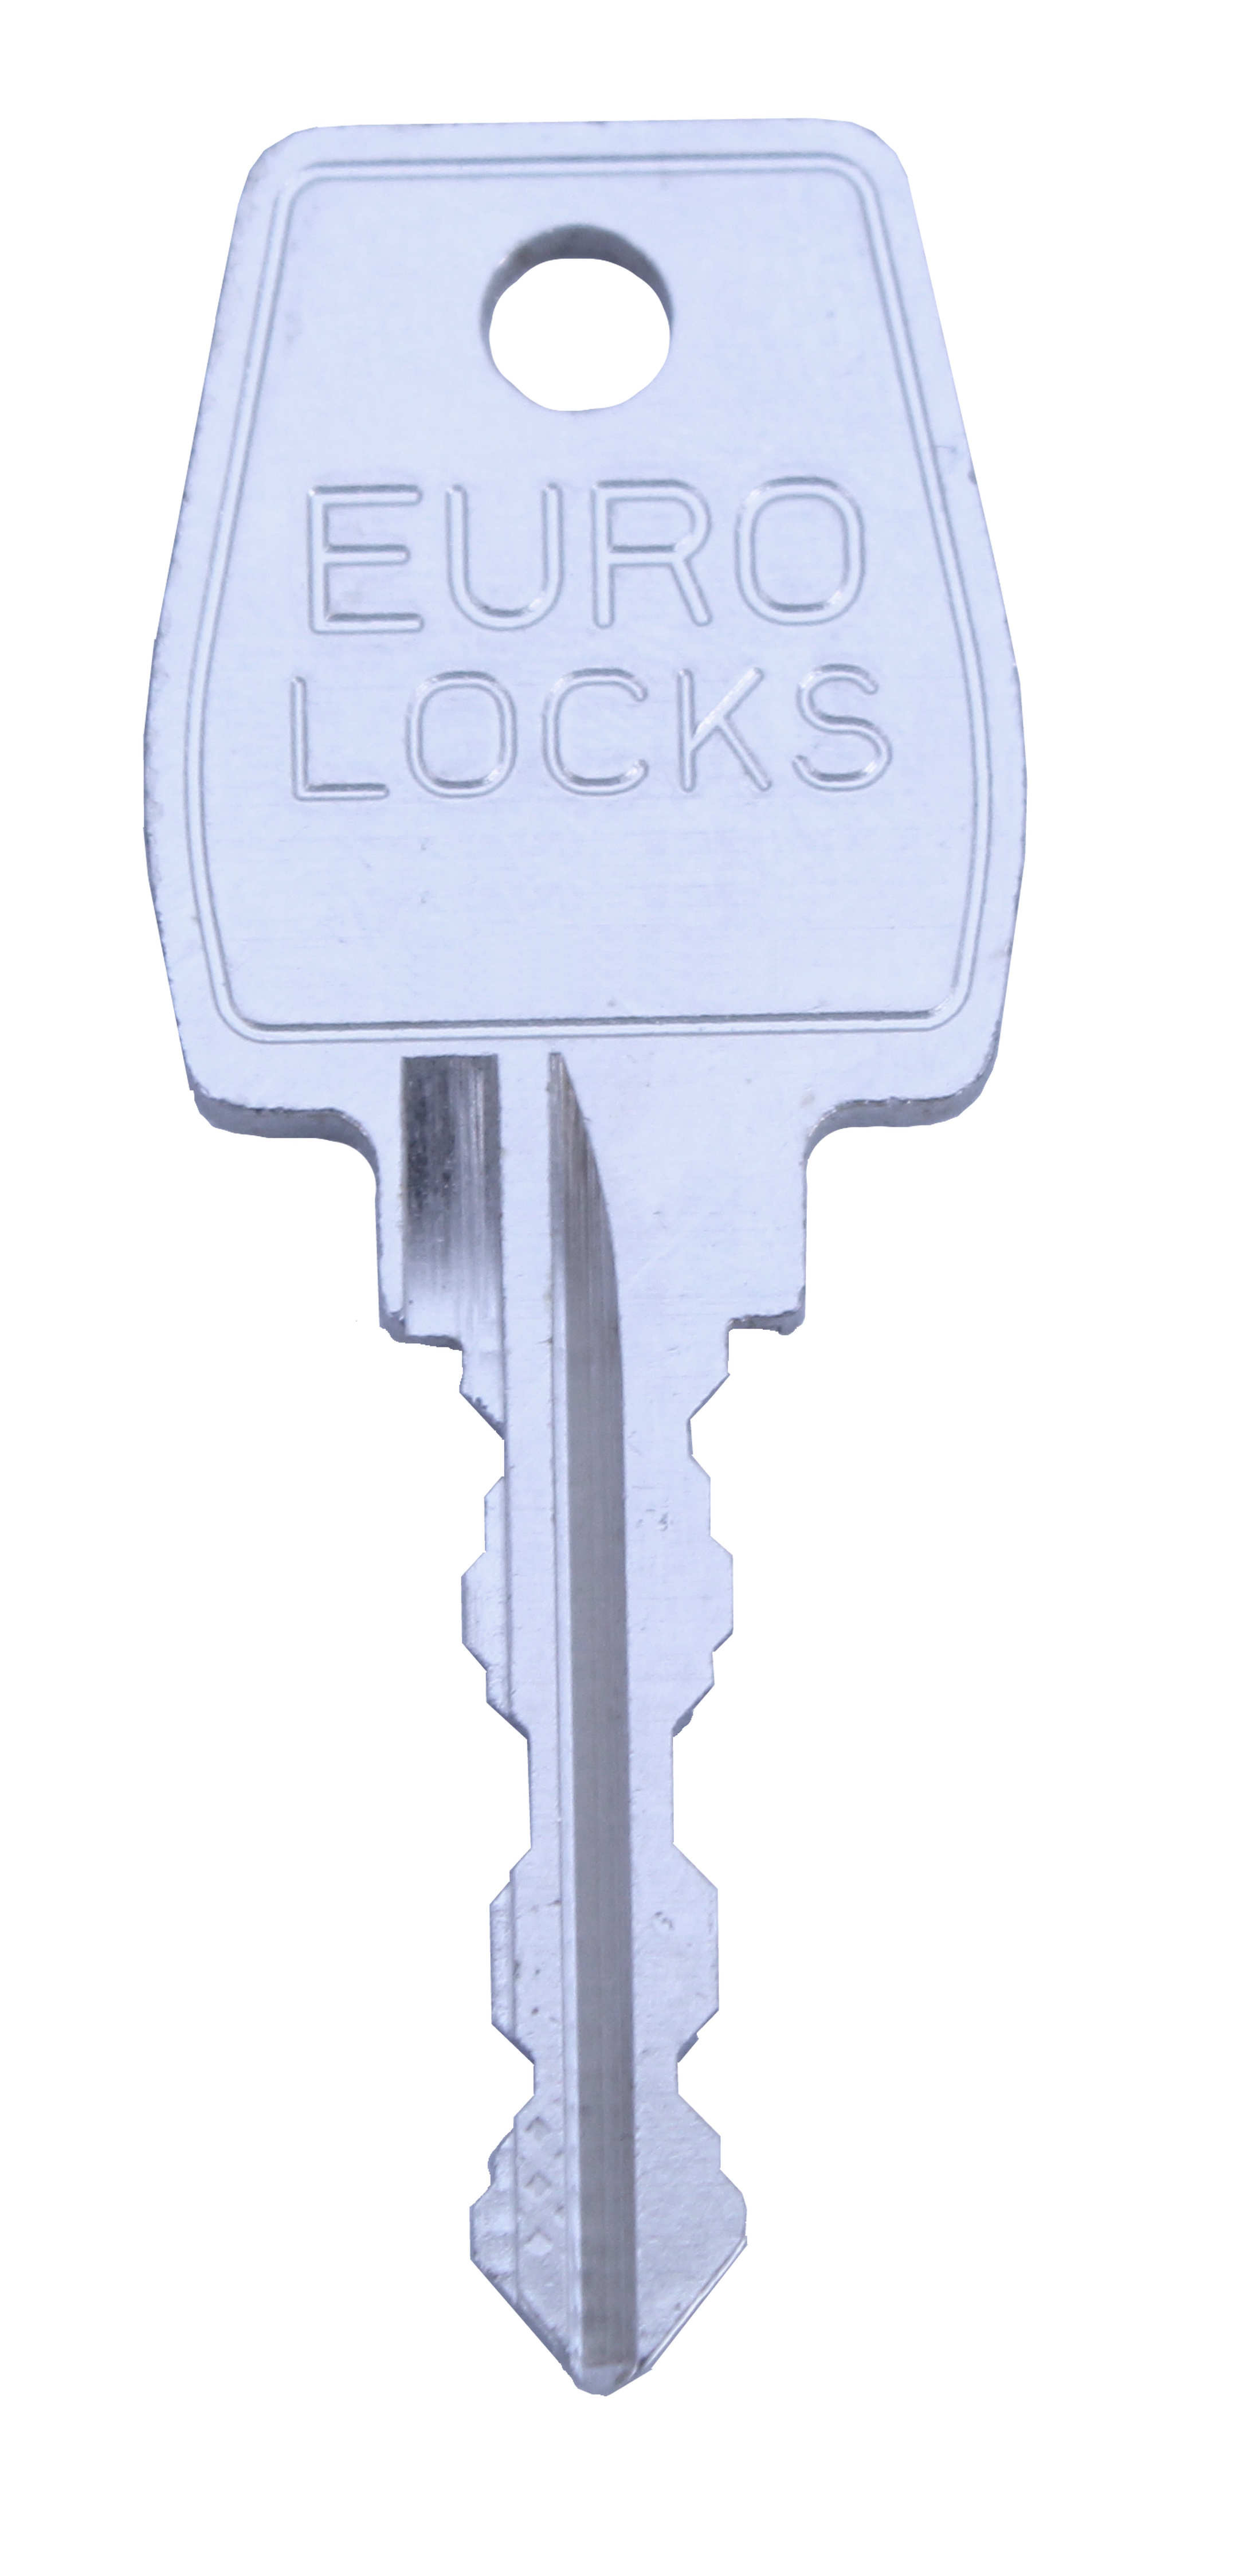 EUROLOCKS Key - Serie 45001-47000